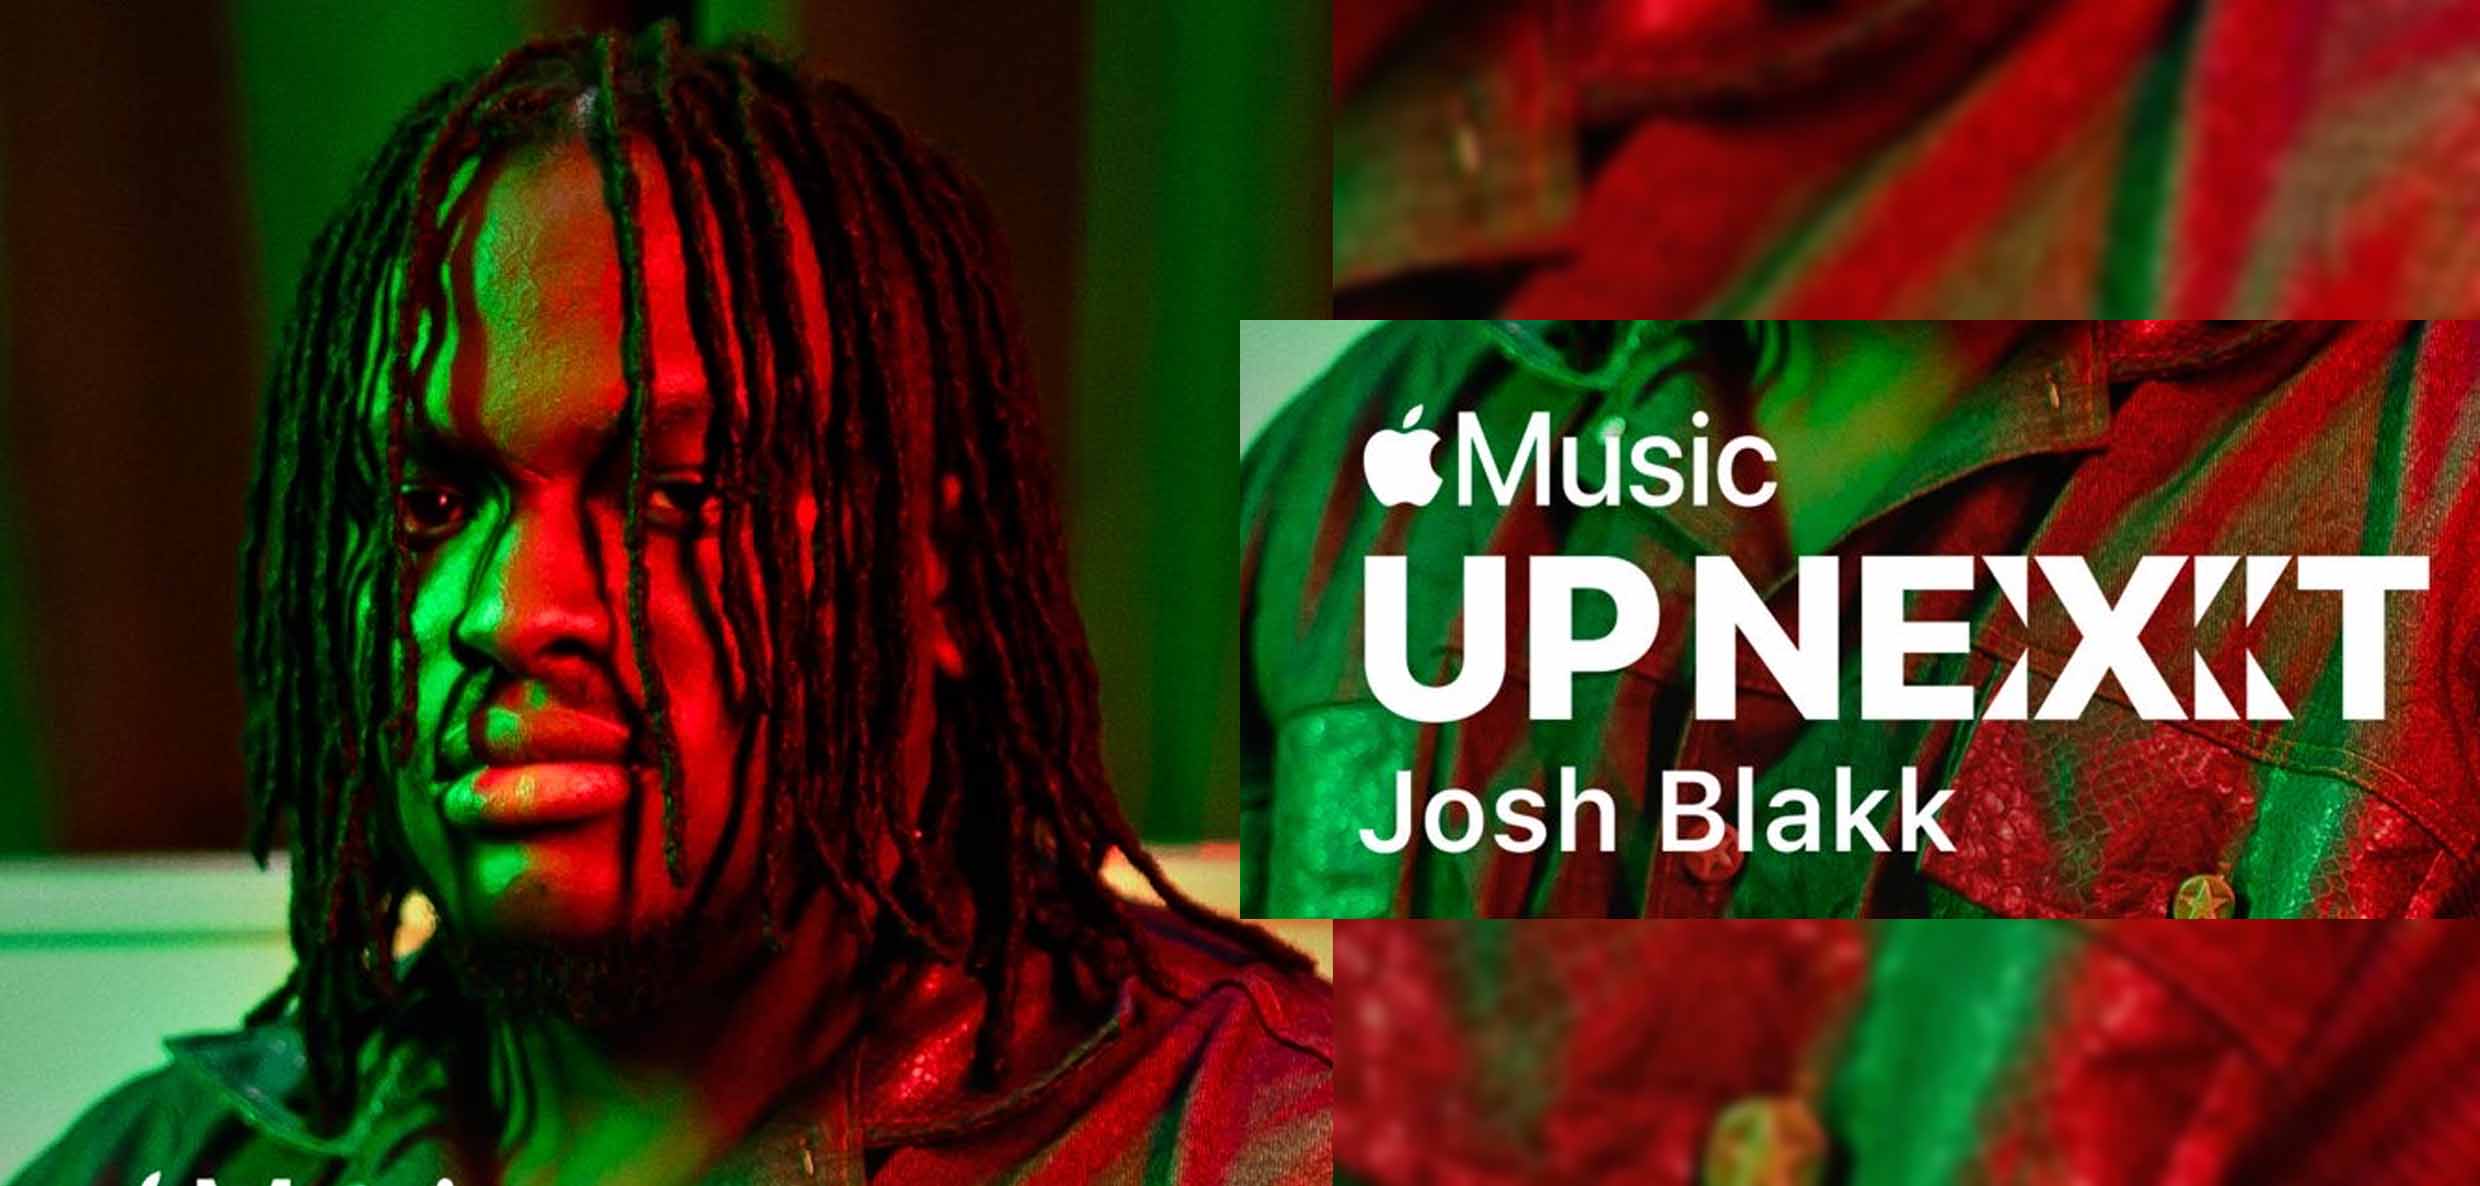 Josh Blakk Apple Music’s Up Next Artist